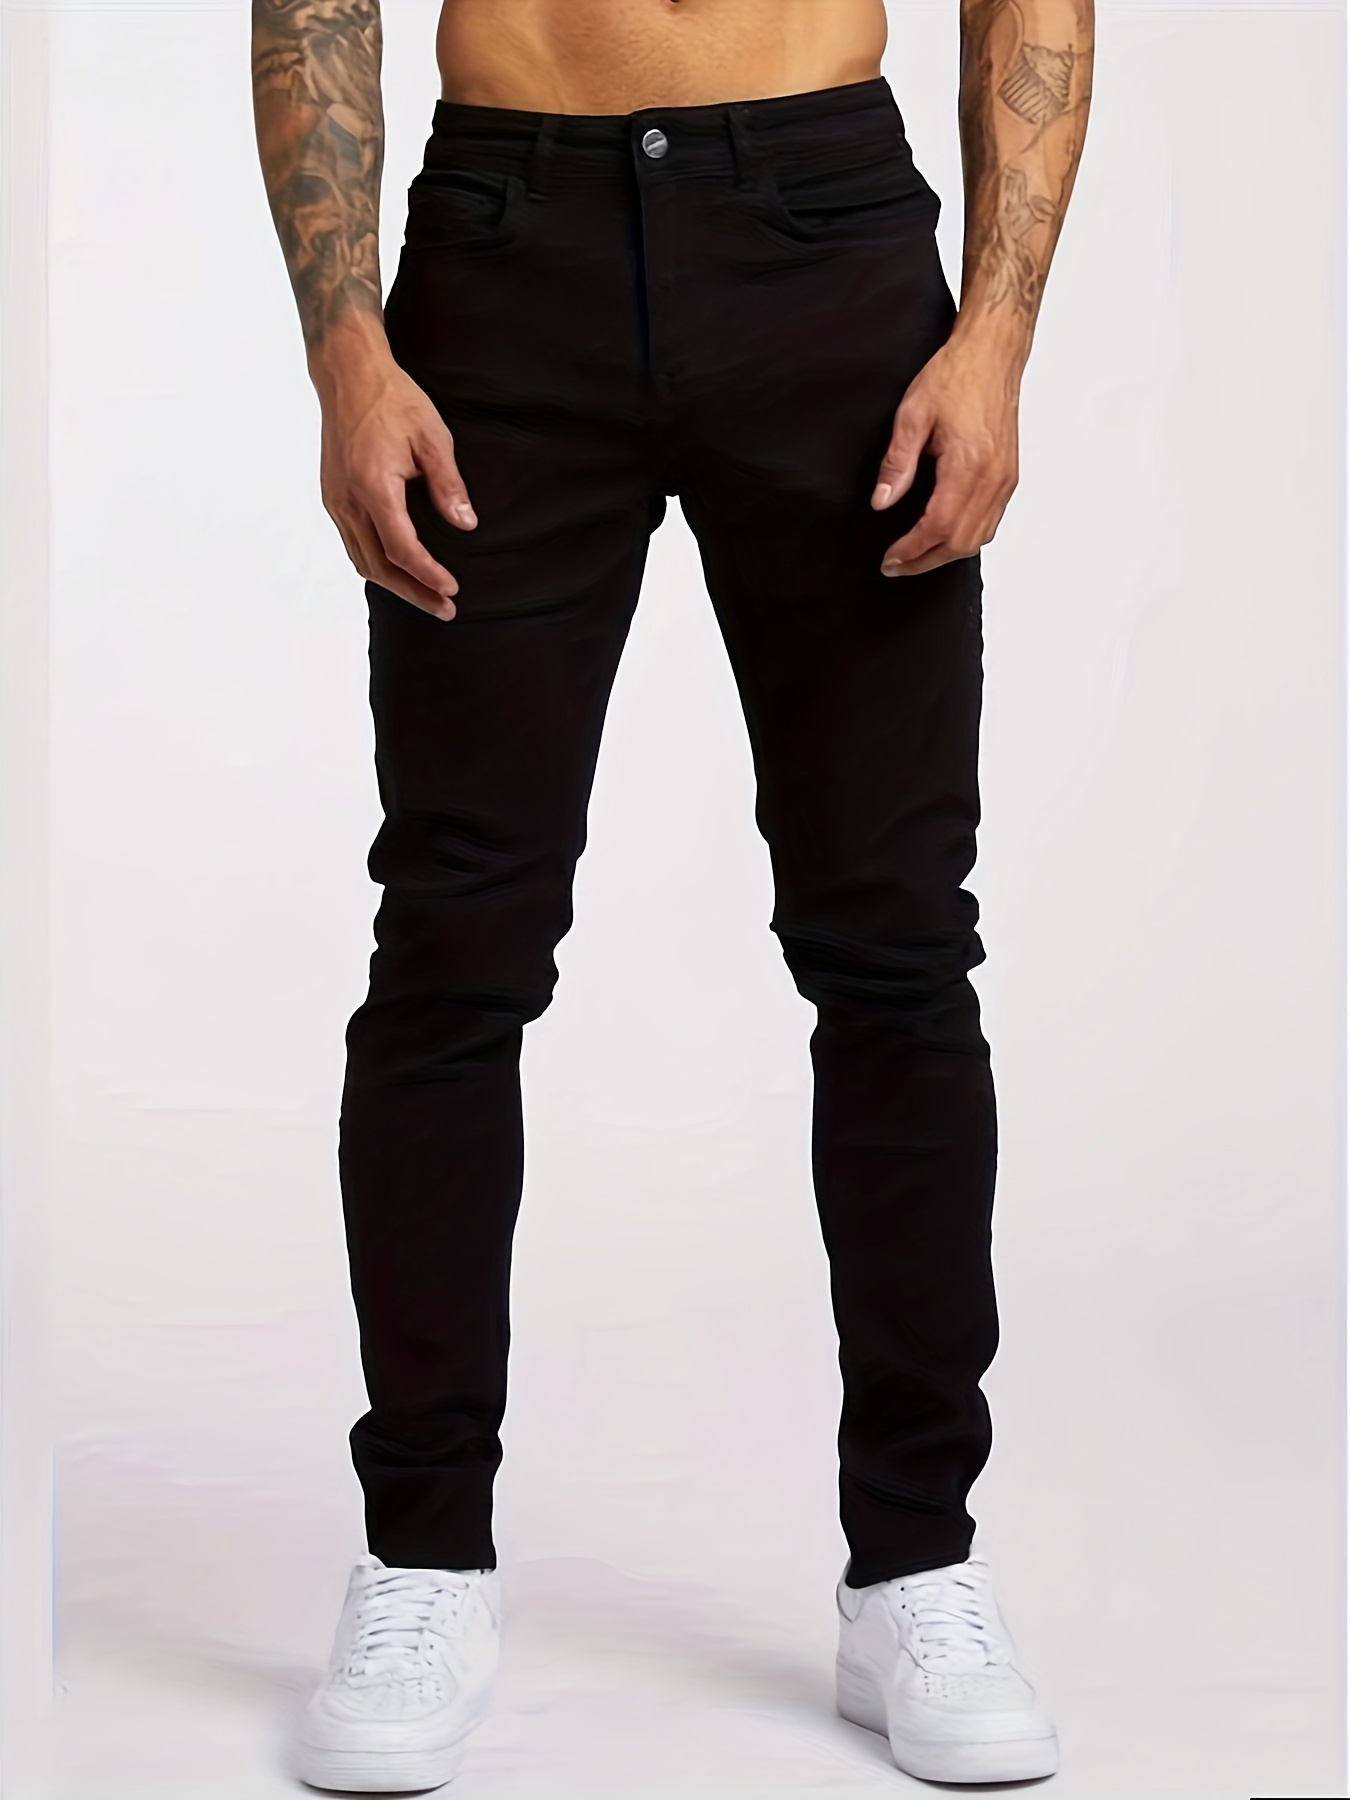 Men, Redbat jeans ,New ,never worn ,size 30